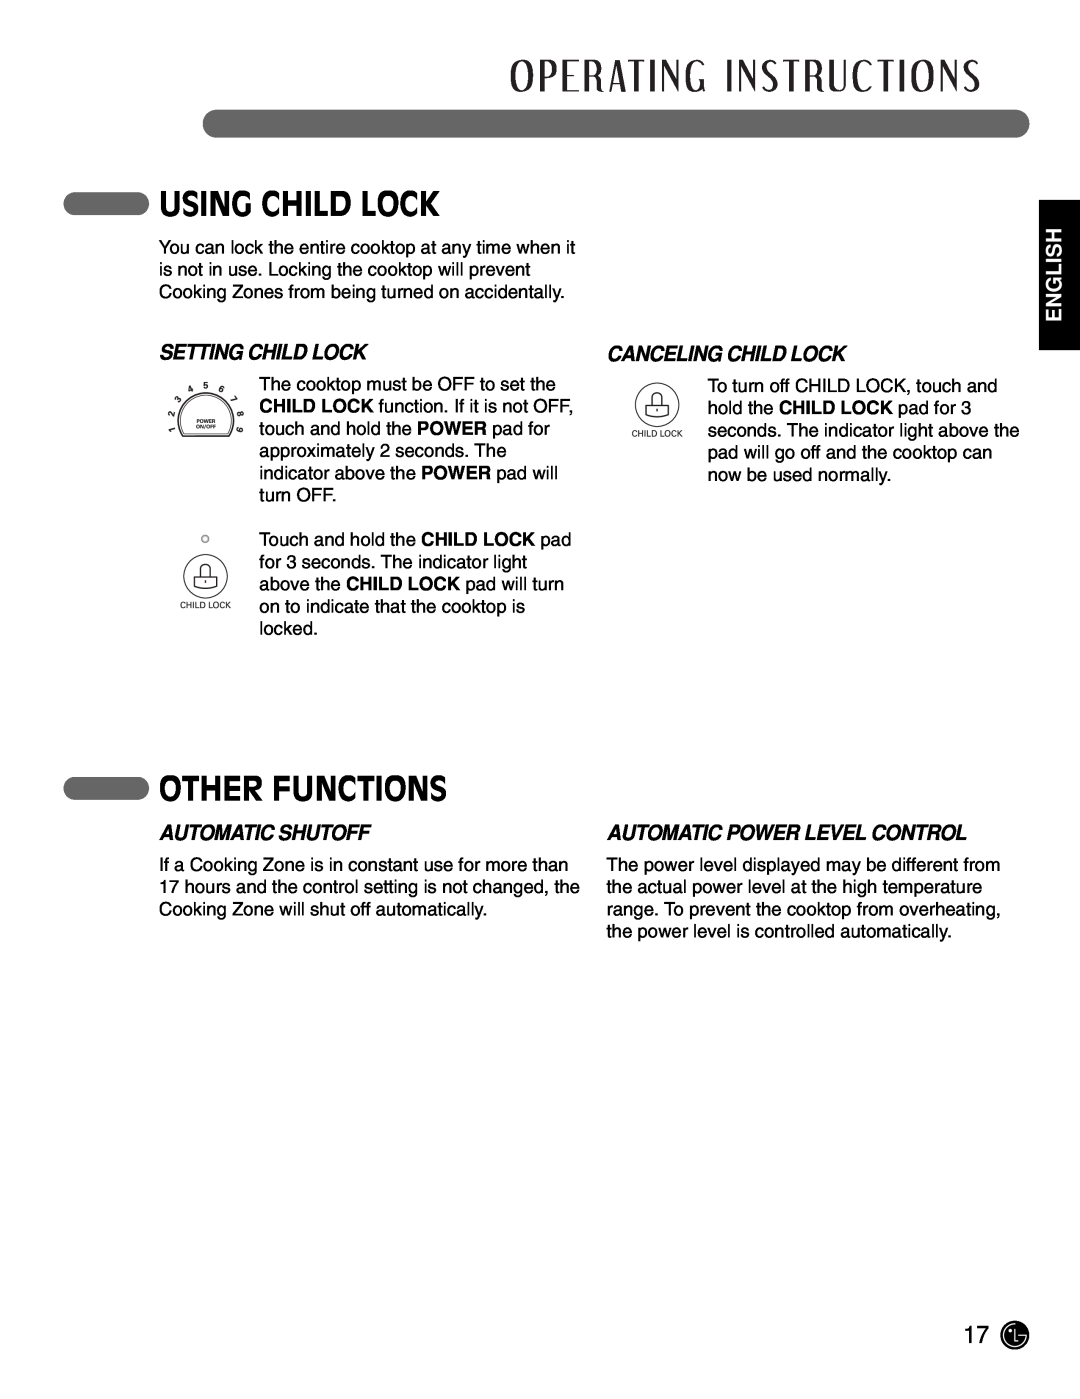 LG Electronics LCE3081ST Using Child Lock, Other Functions, Setting Child Lock, Canceling Child Lock, Automatic Shutoff 